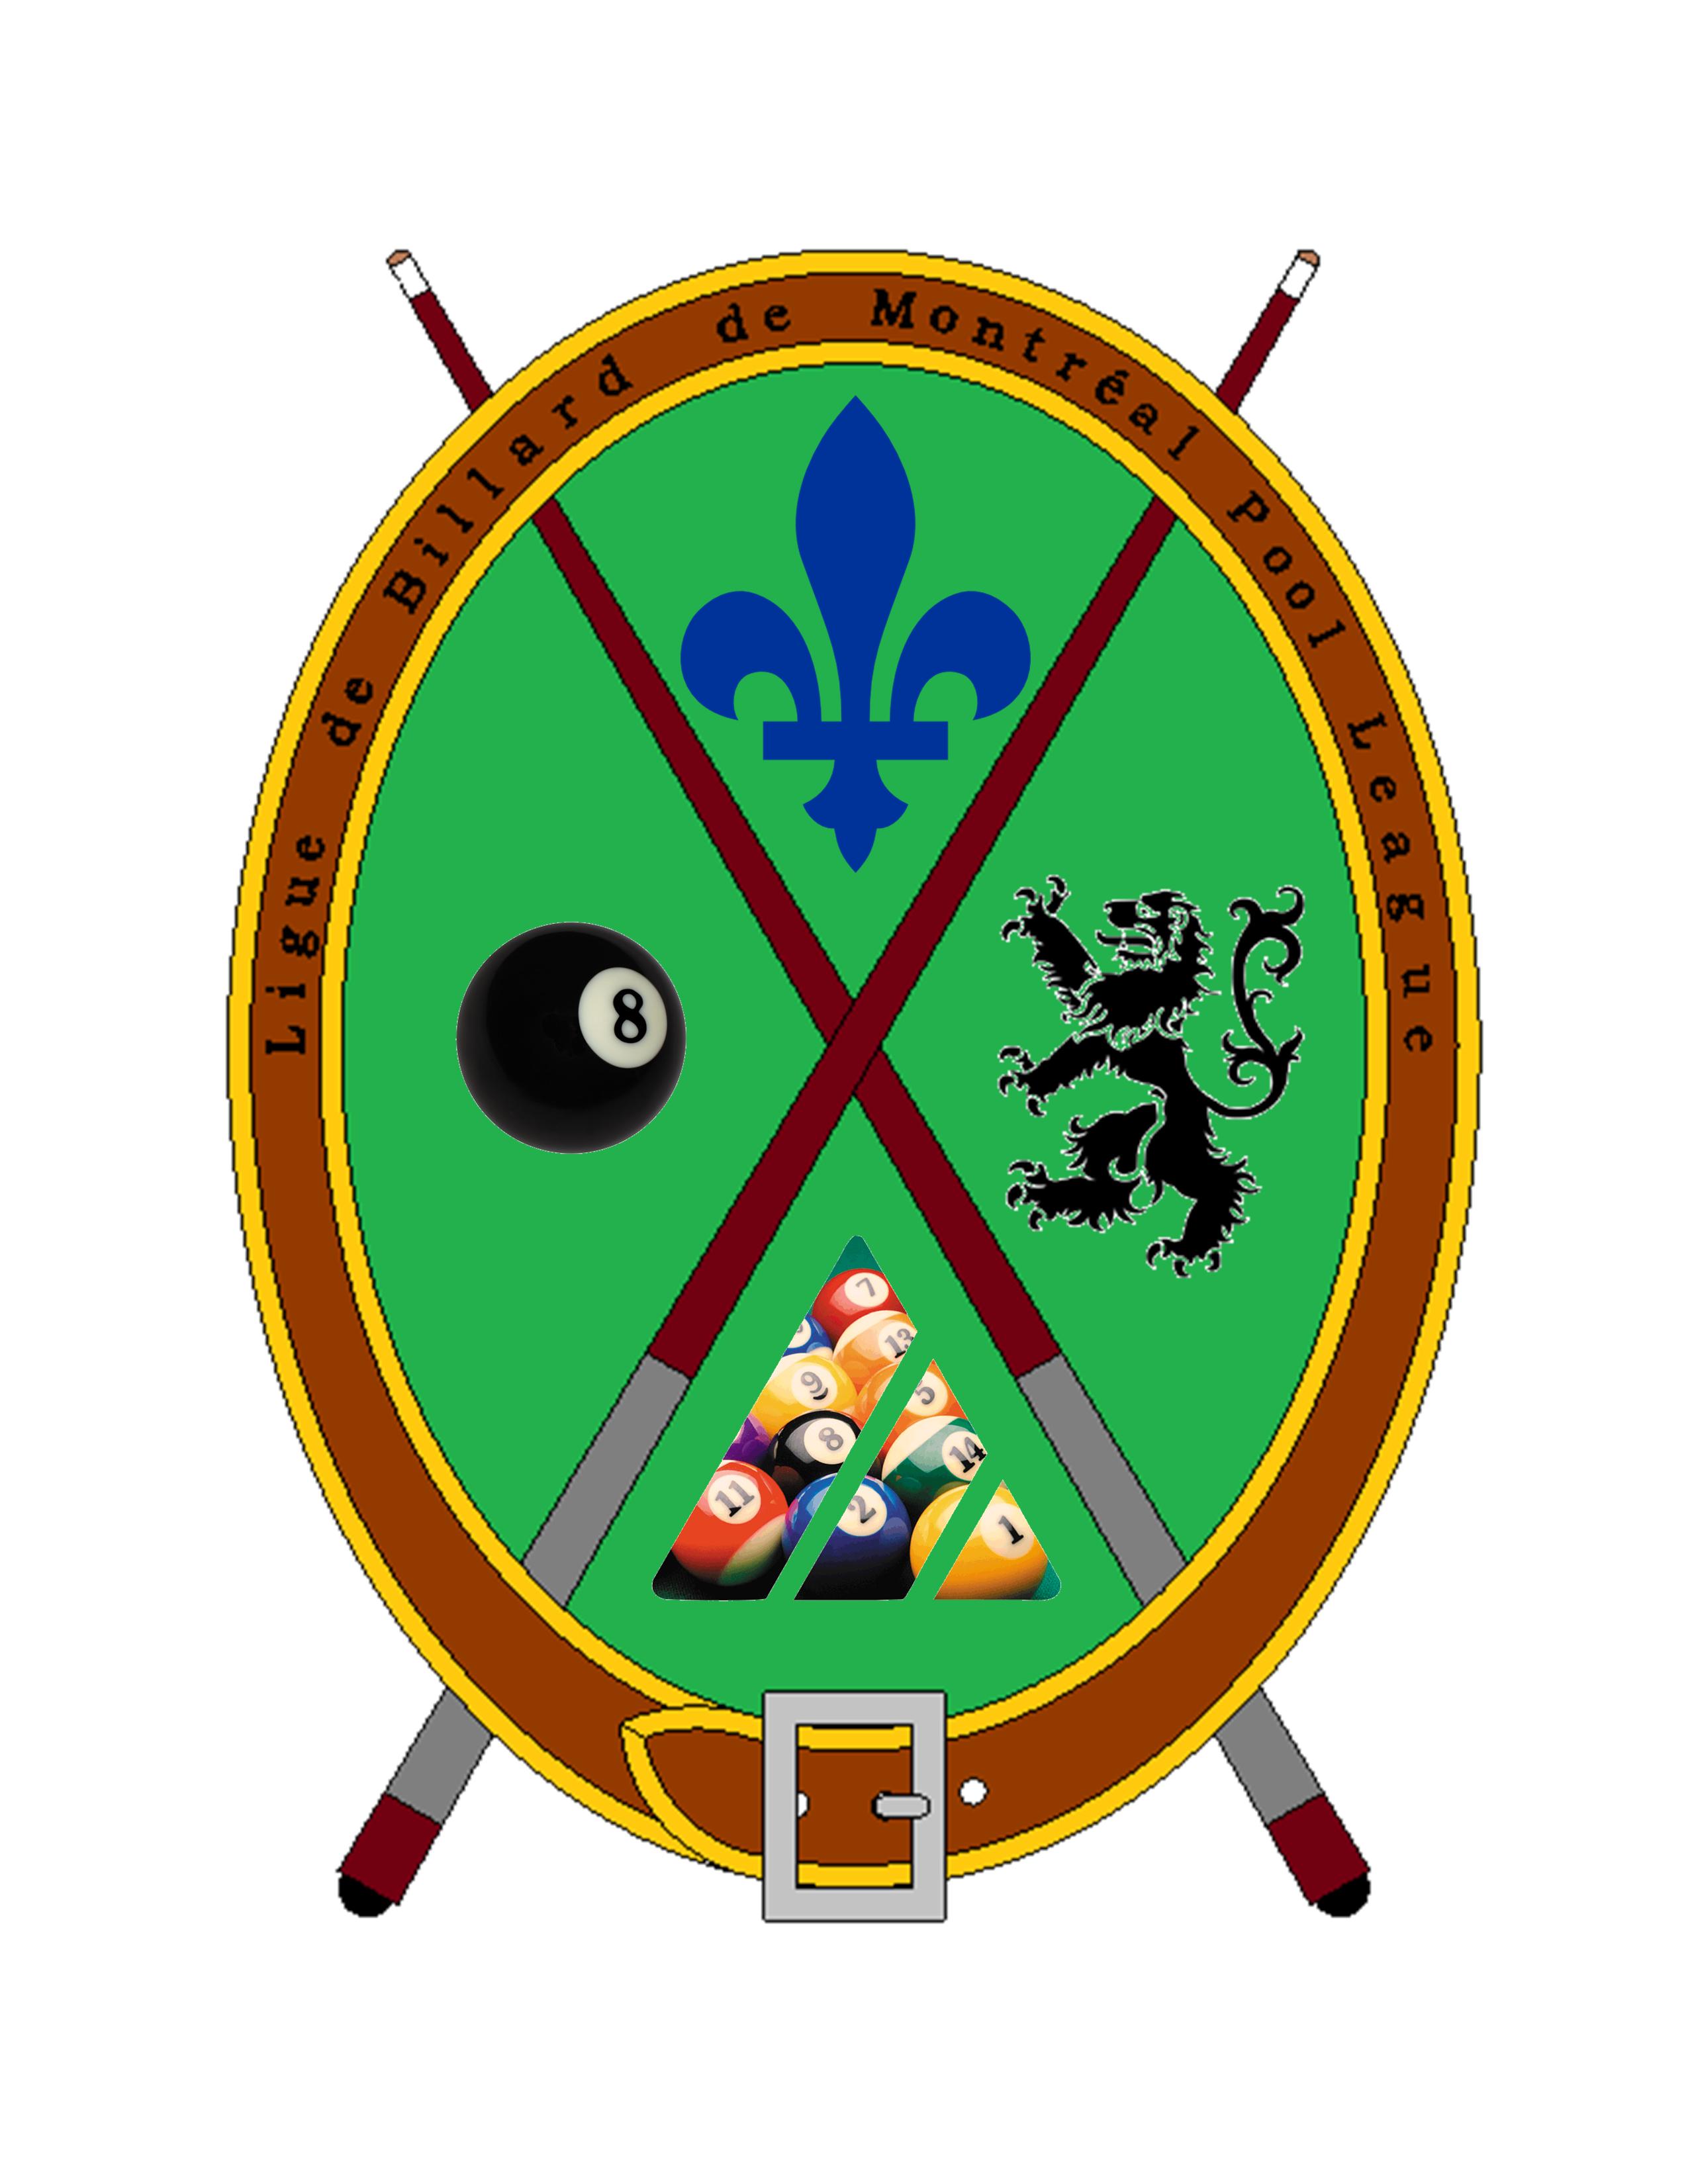 Montreal Pool League